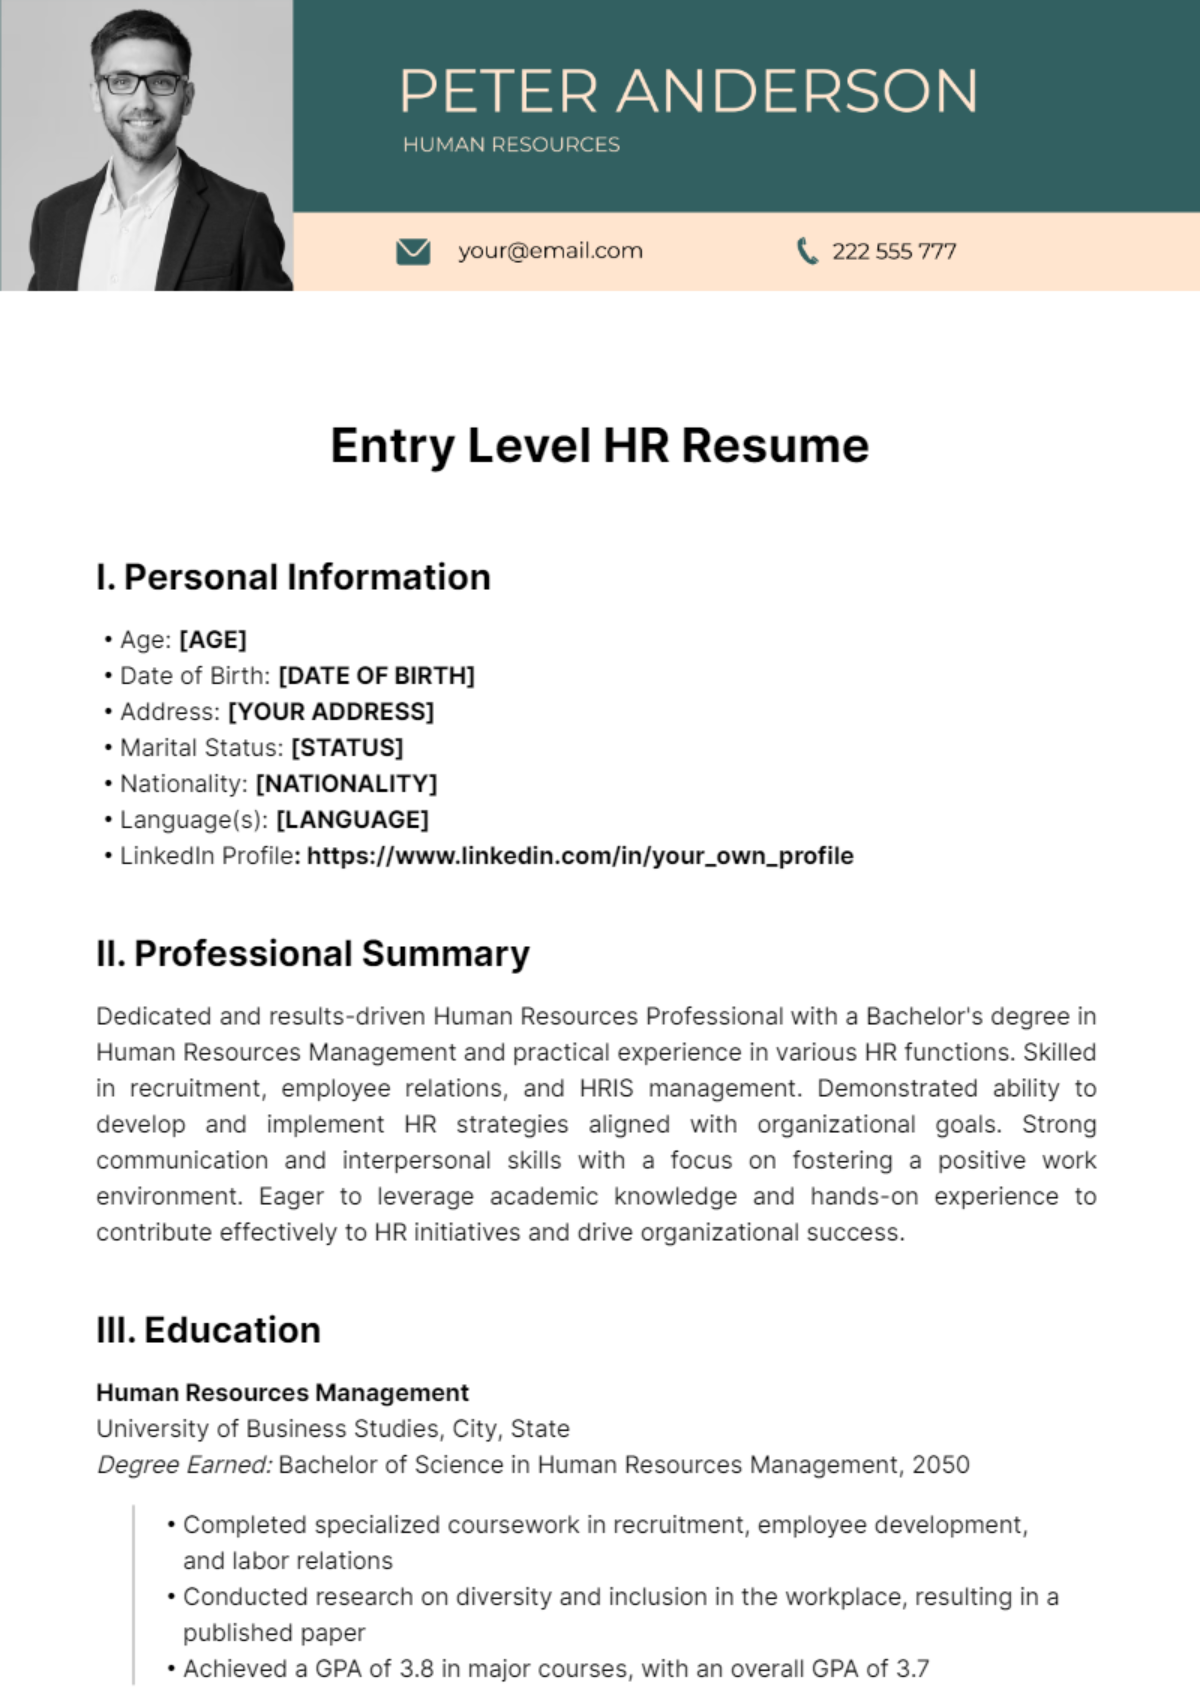 Entry Level HR Resume Template